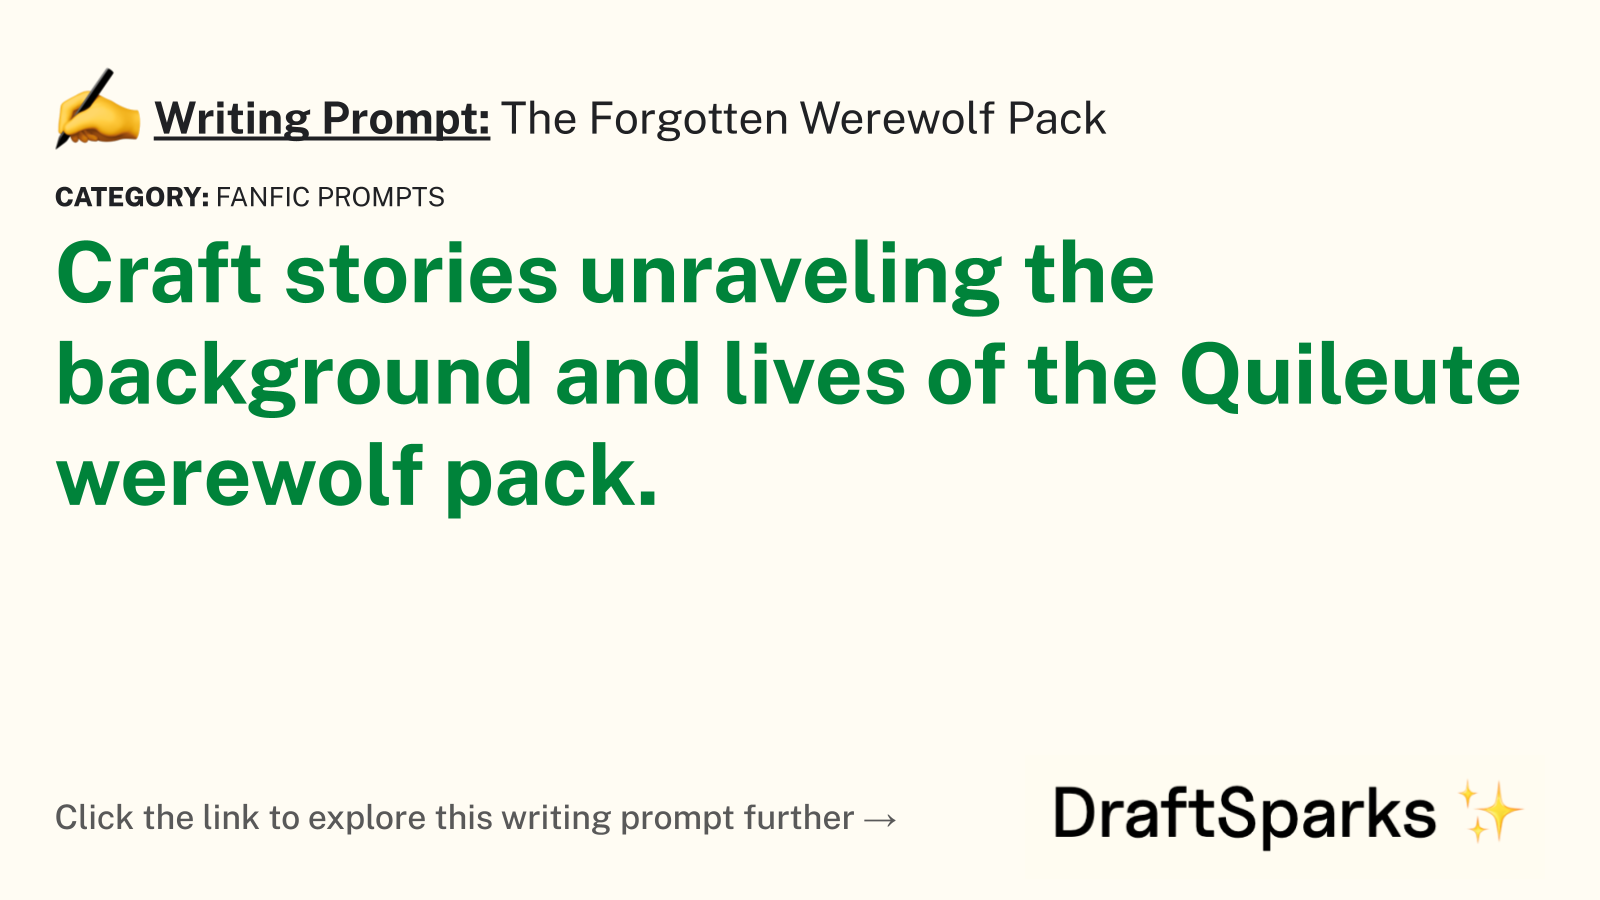 The Forgotten Werewolf Pack